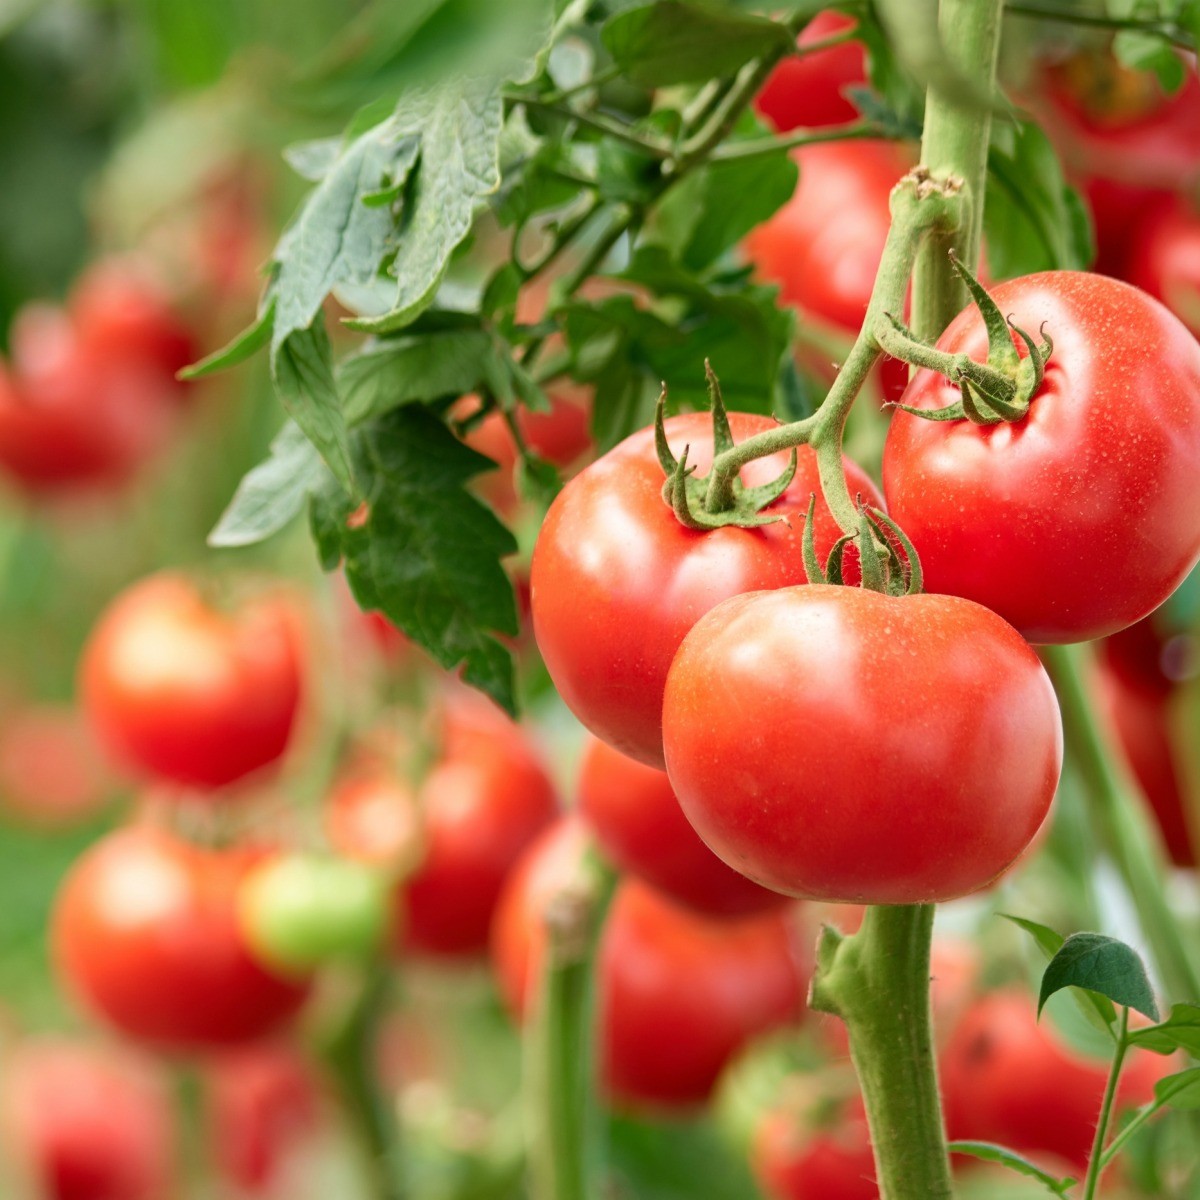 misshapen tomatoes